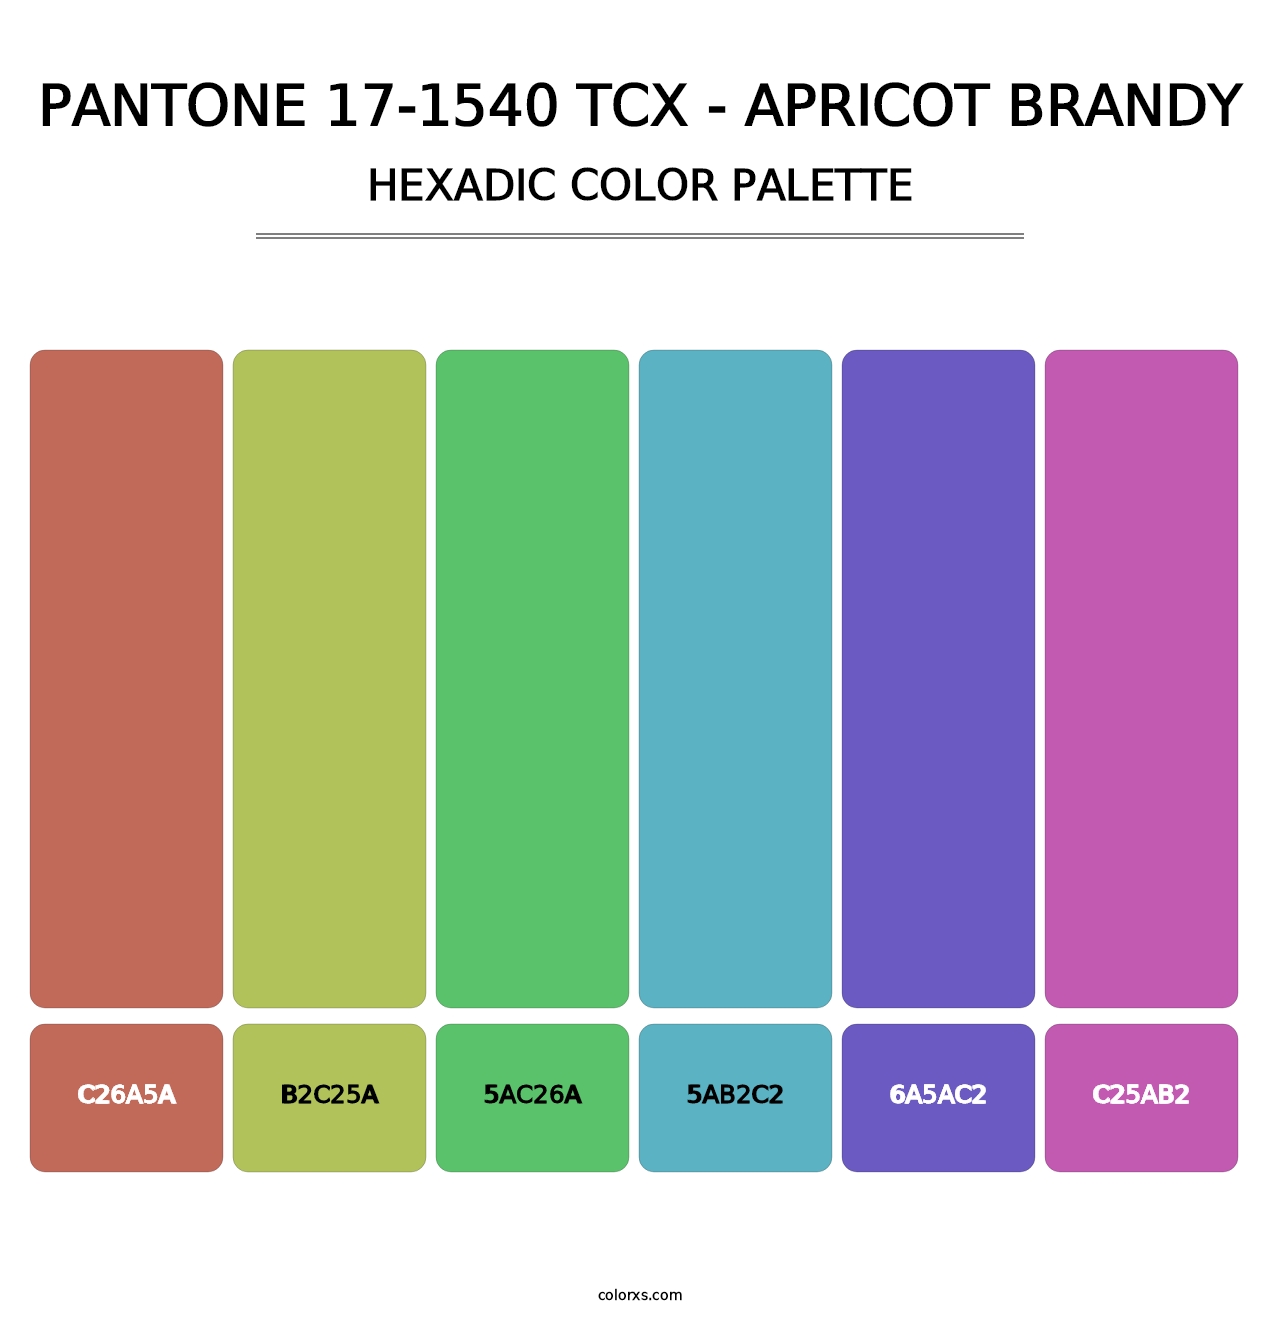 PANTONE 17-1540 TCX - Apricot Brandy - Hexadic Color Palette